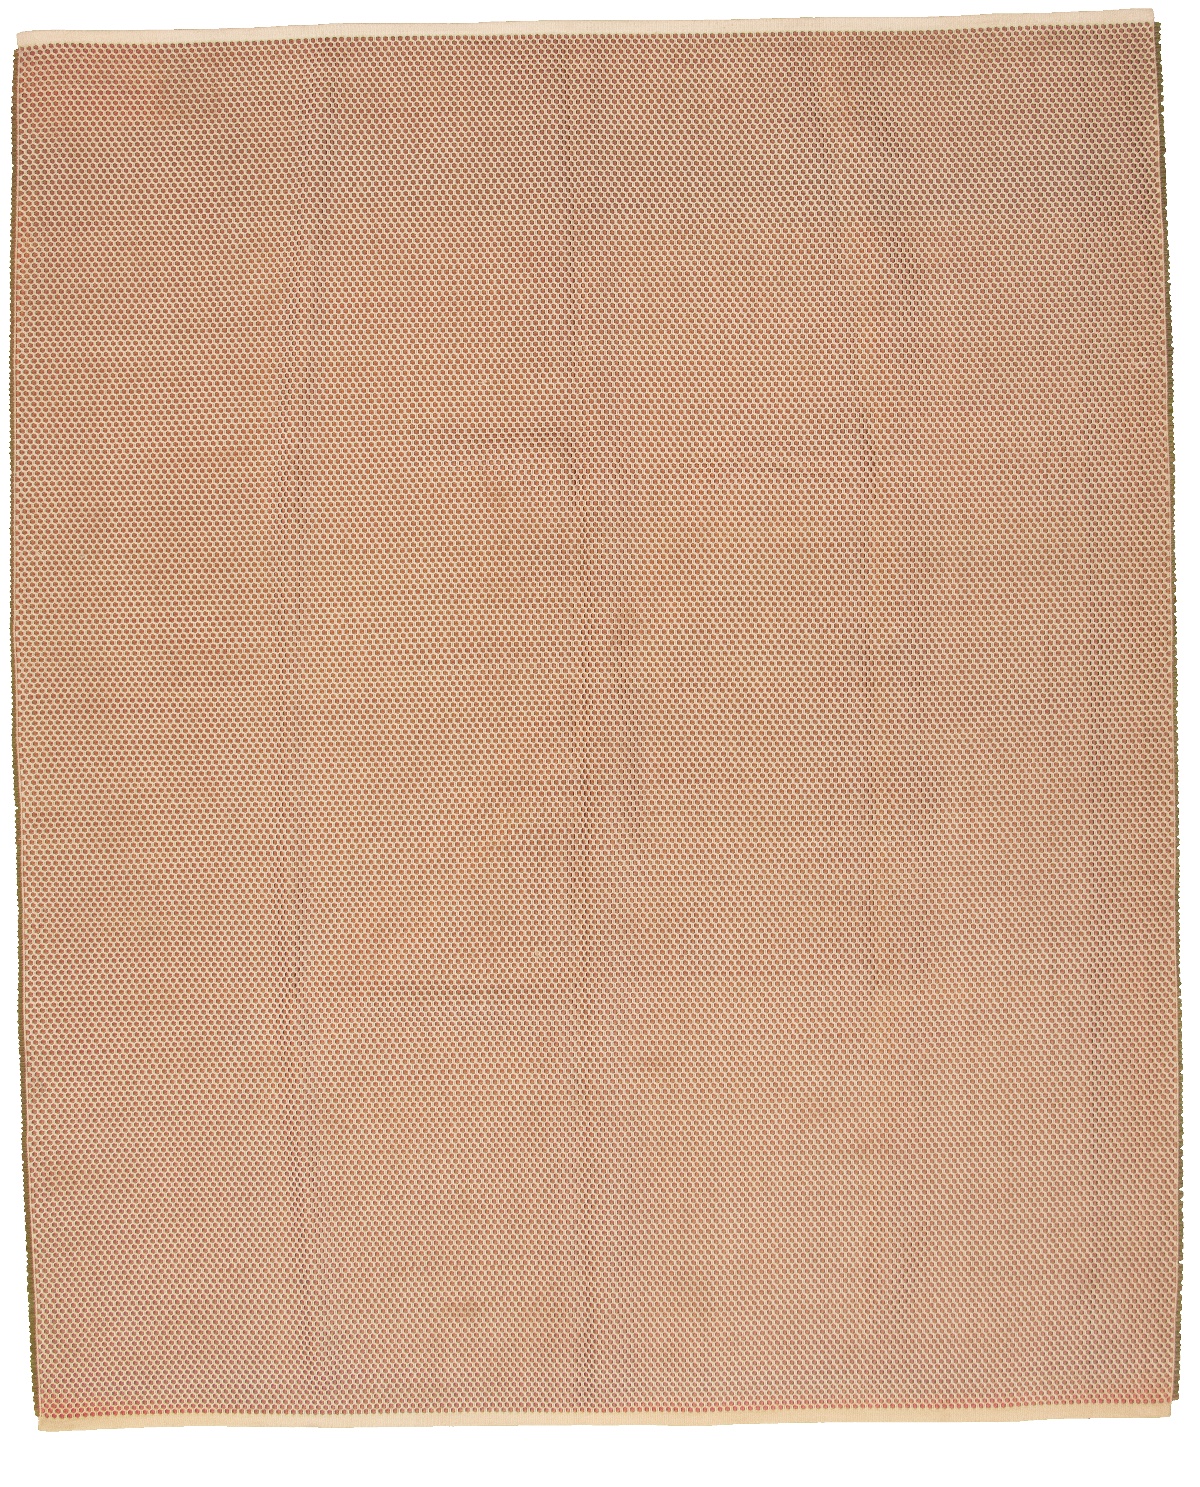 Handmade Honeycomb III Dark Copper Cotton/Polyester Rug 8'1" x 11'7" Size: 8'1" x 11'7"  